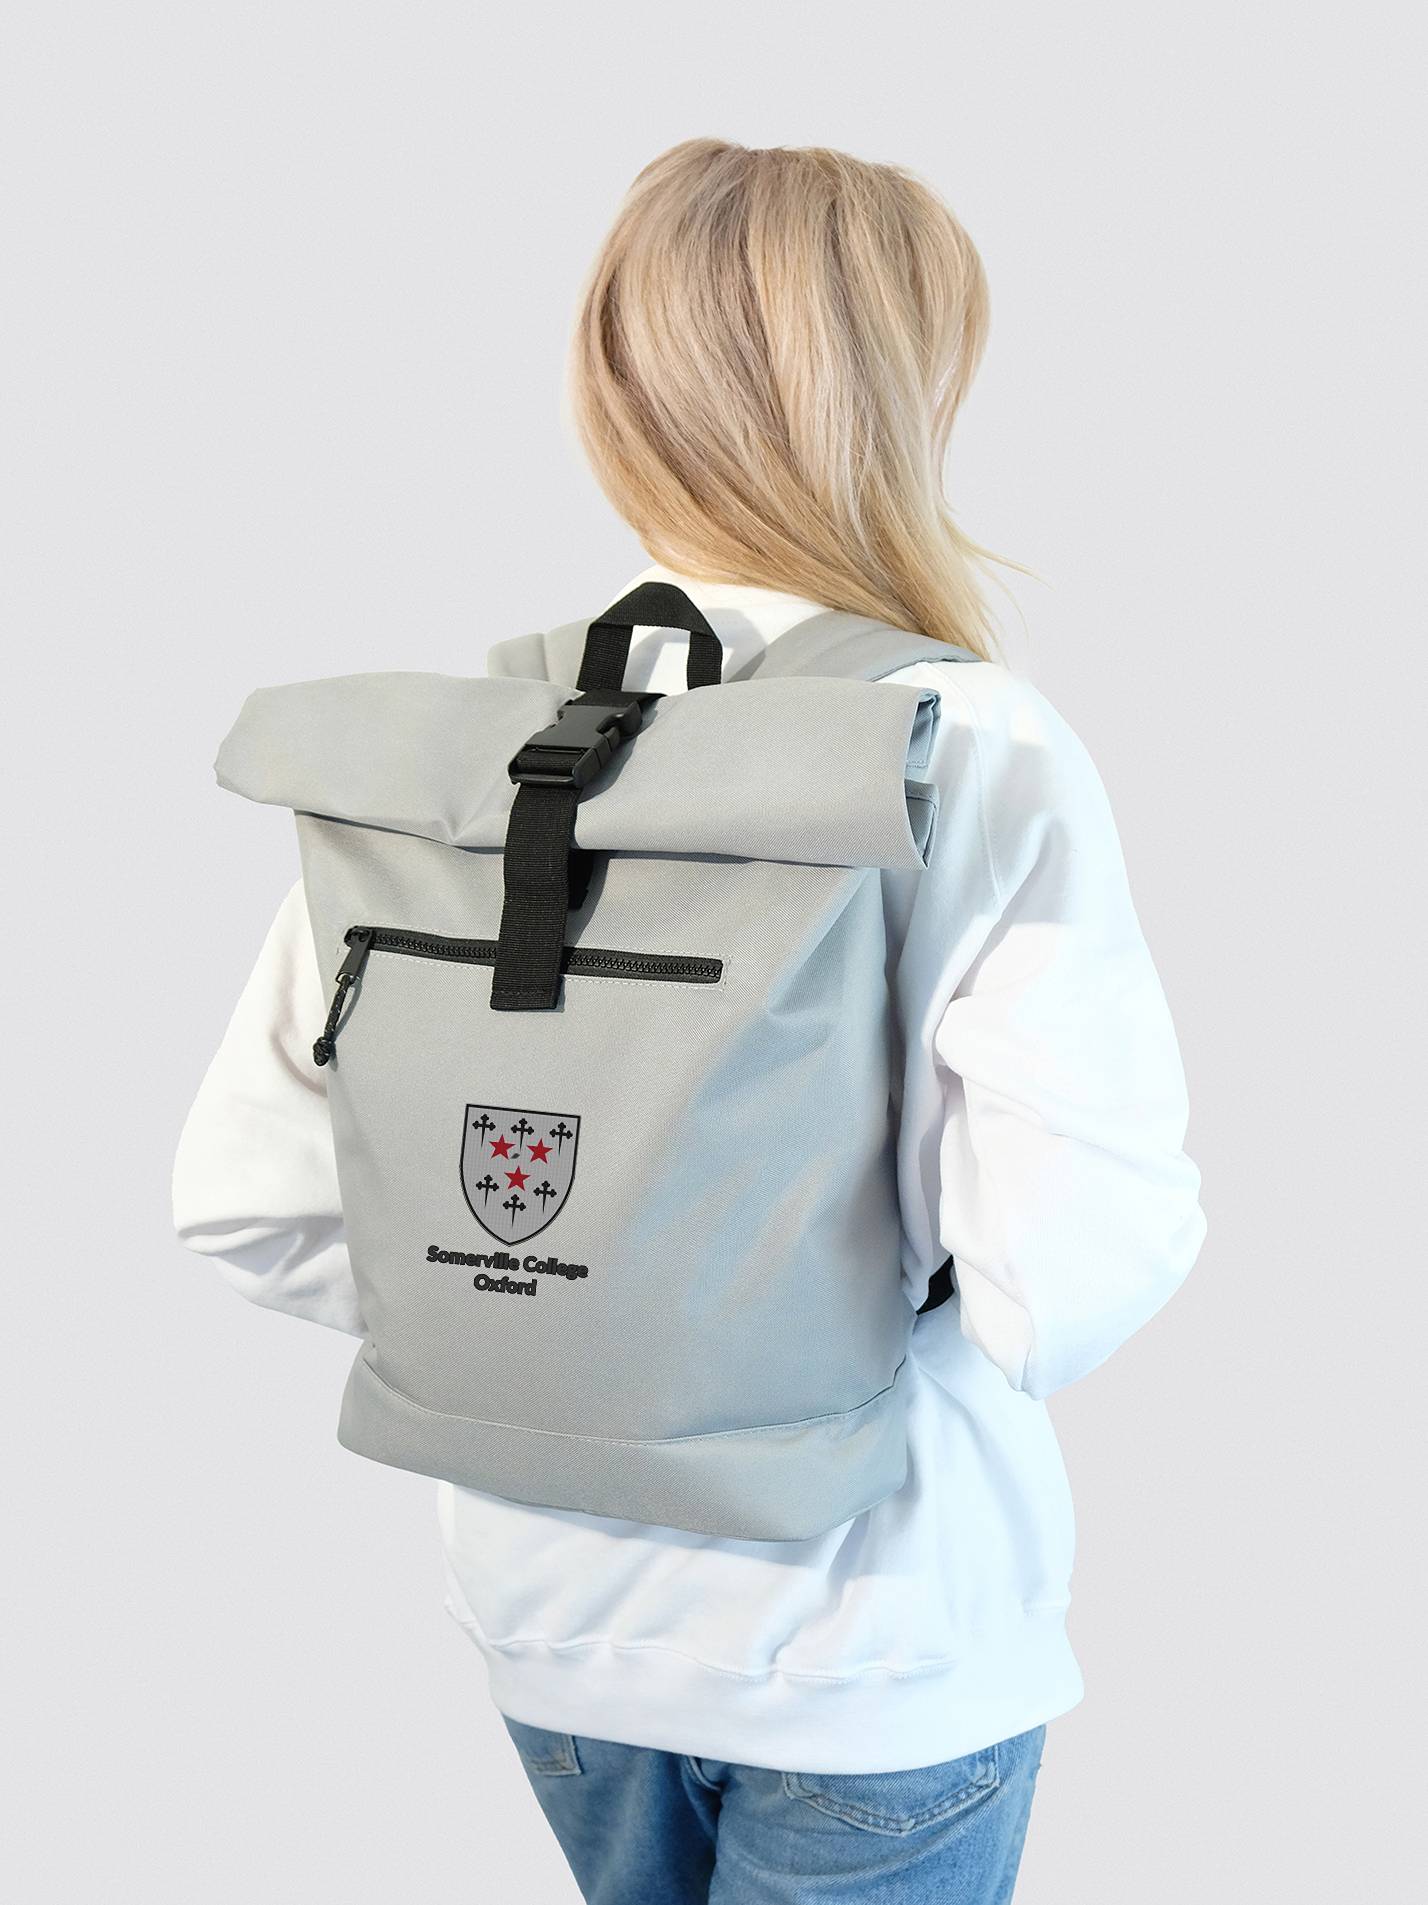 Somerville College Oxford JCR Traditional Crest Roll Top Backpack